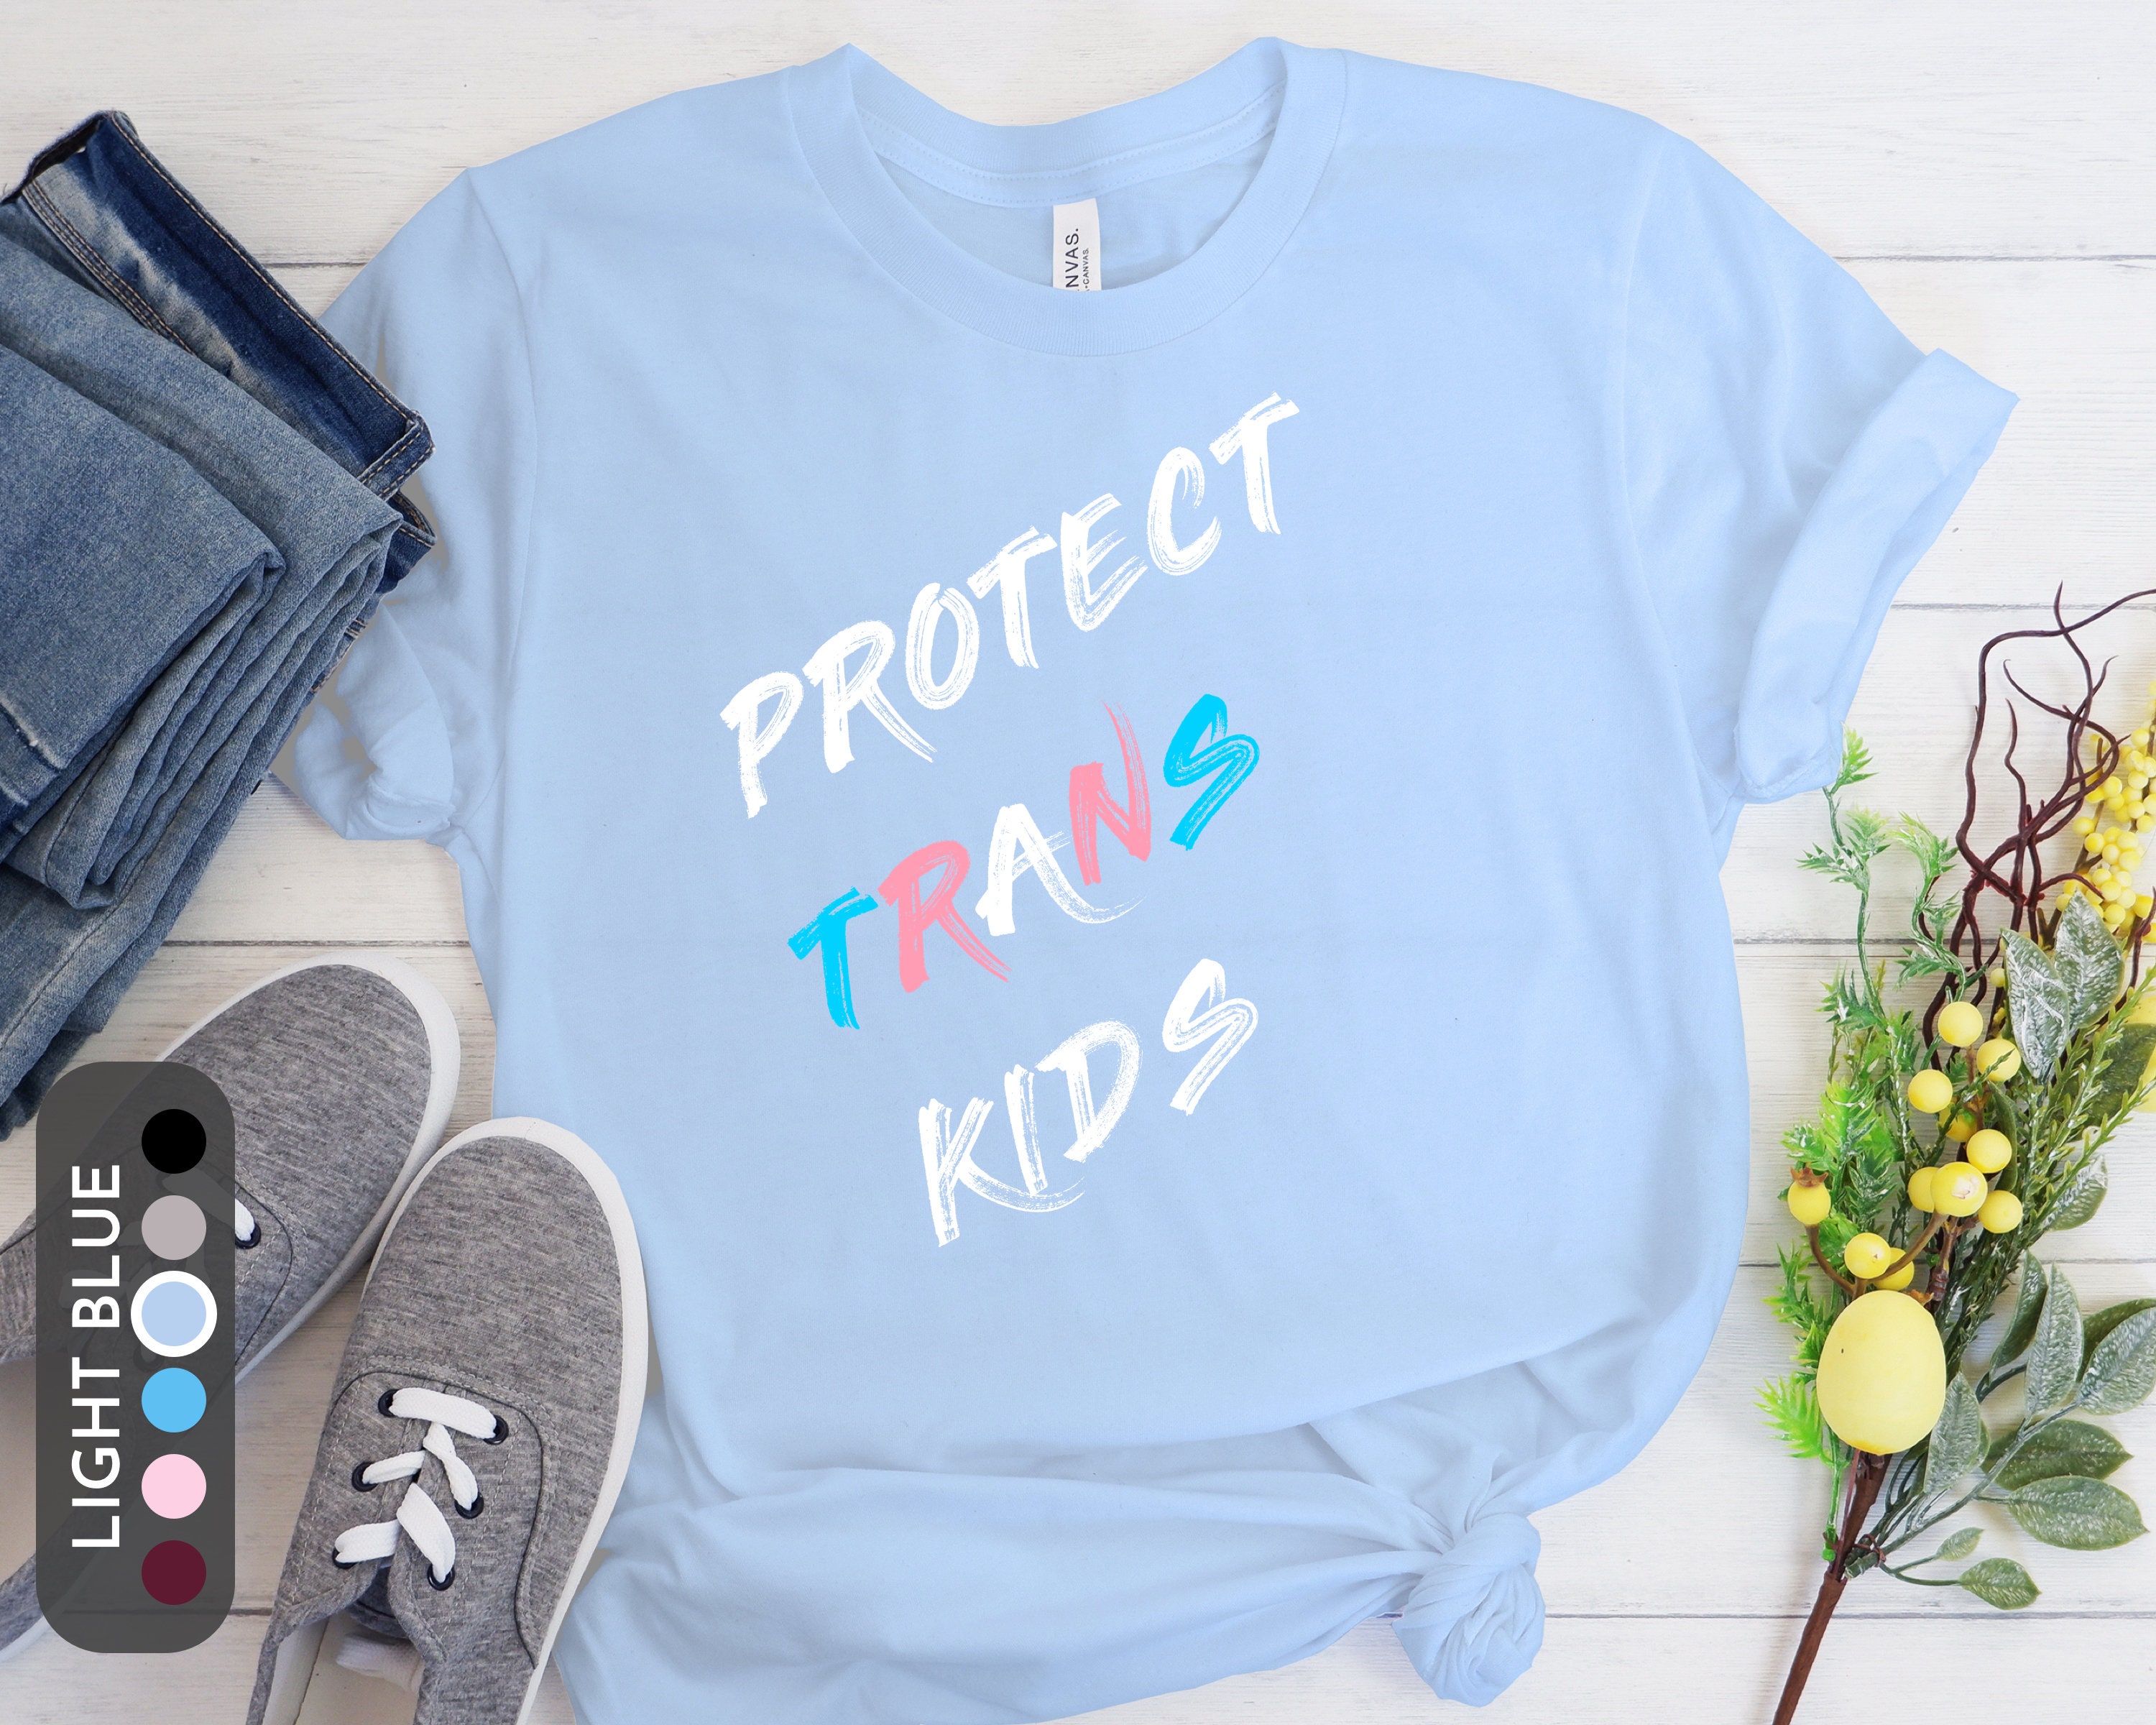 Protect Trans Kids Shirt Trans Trans women Trans men Trans | Etsy